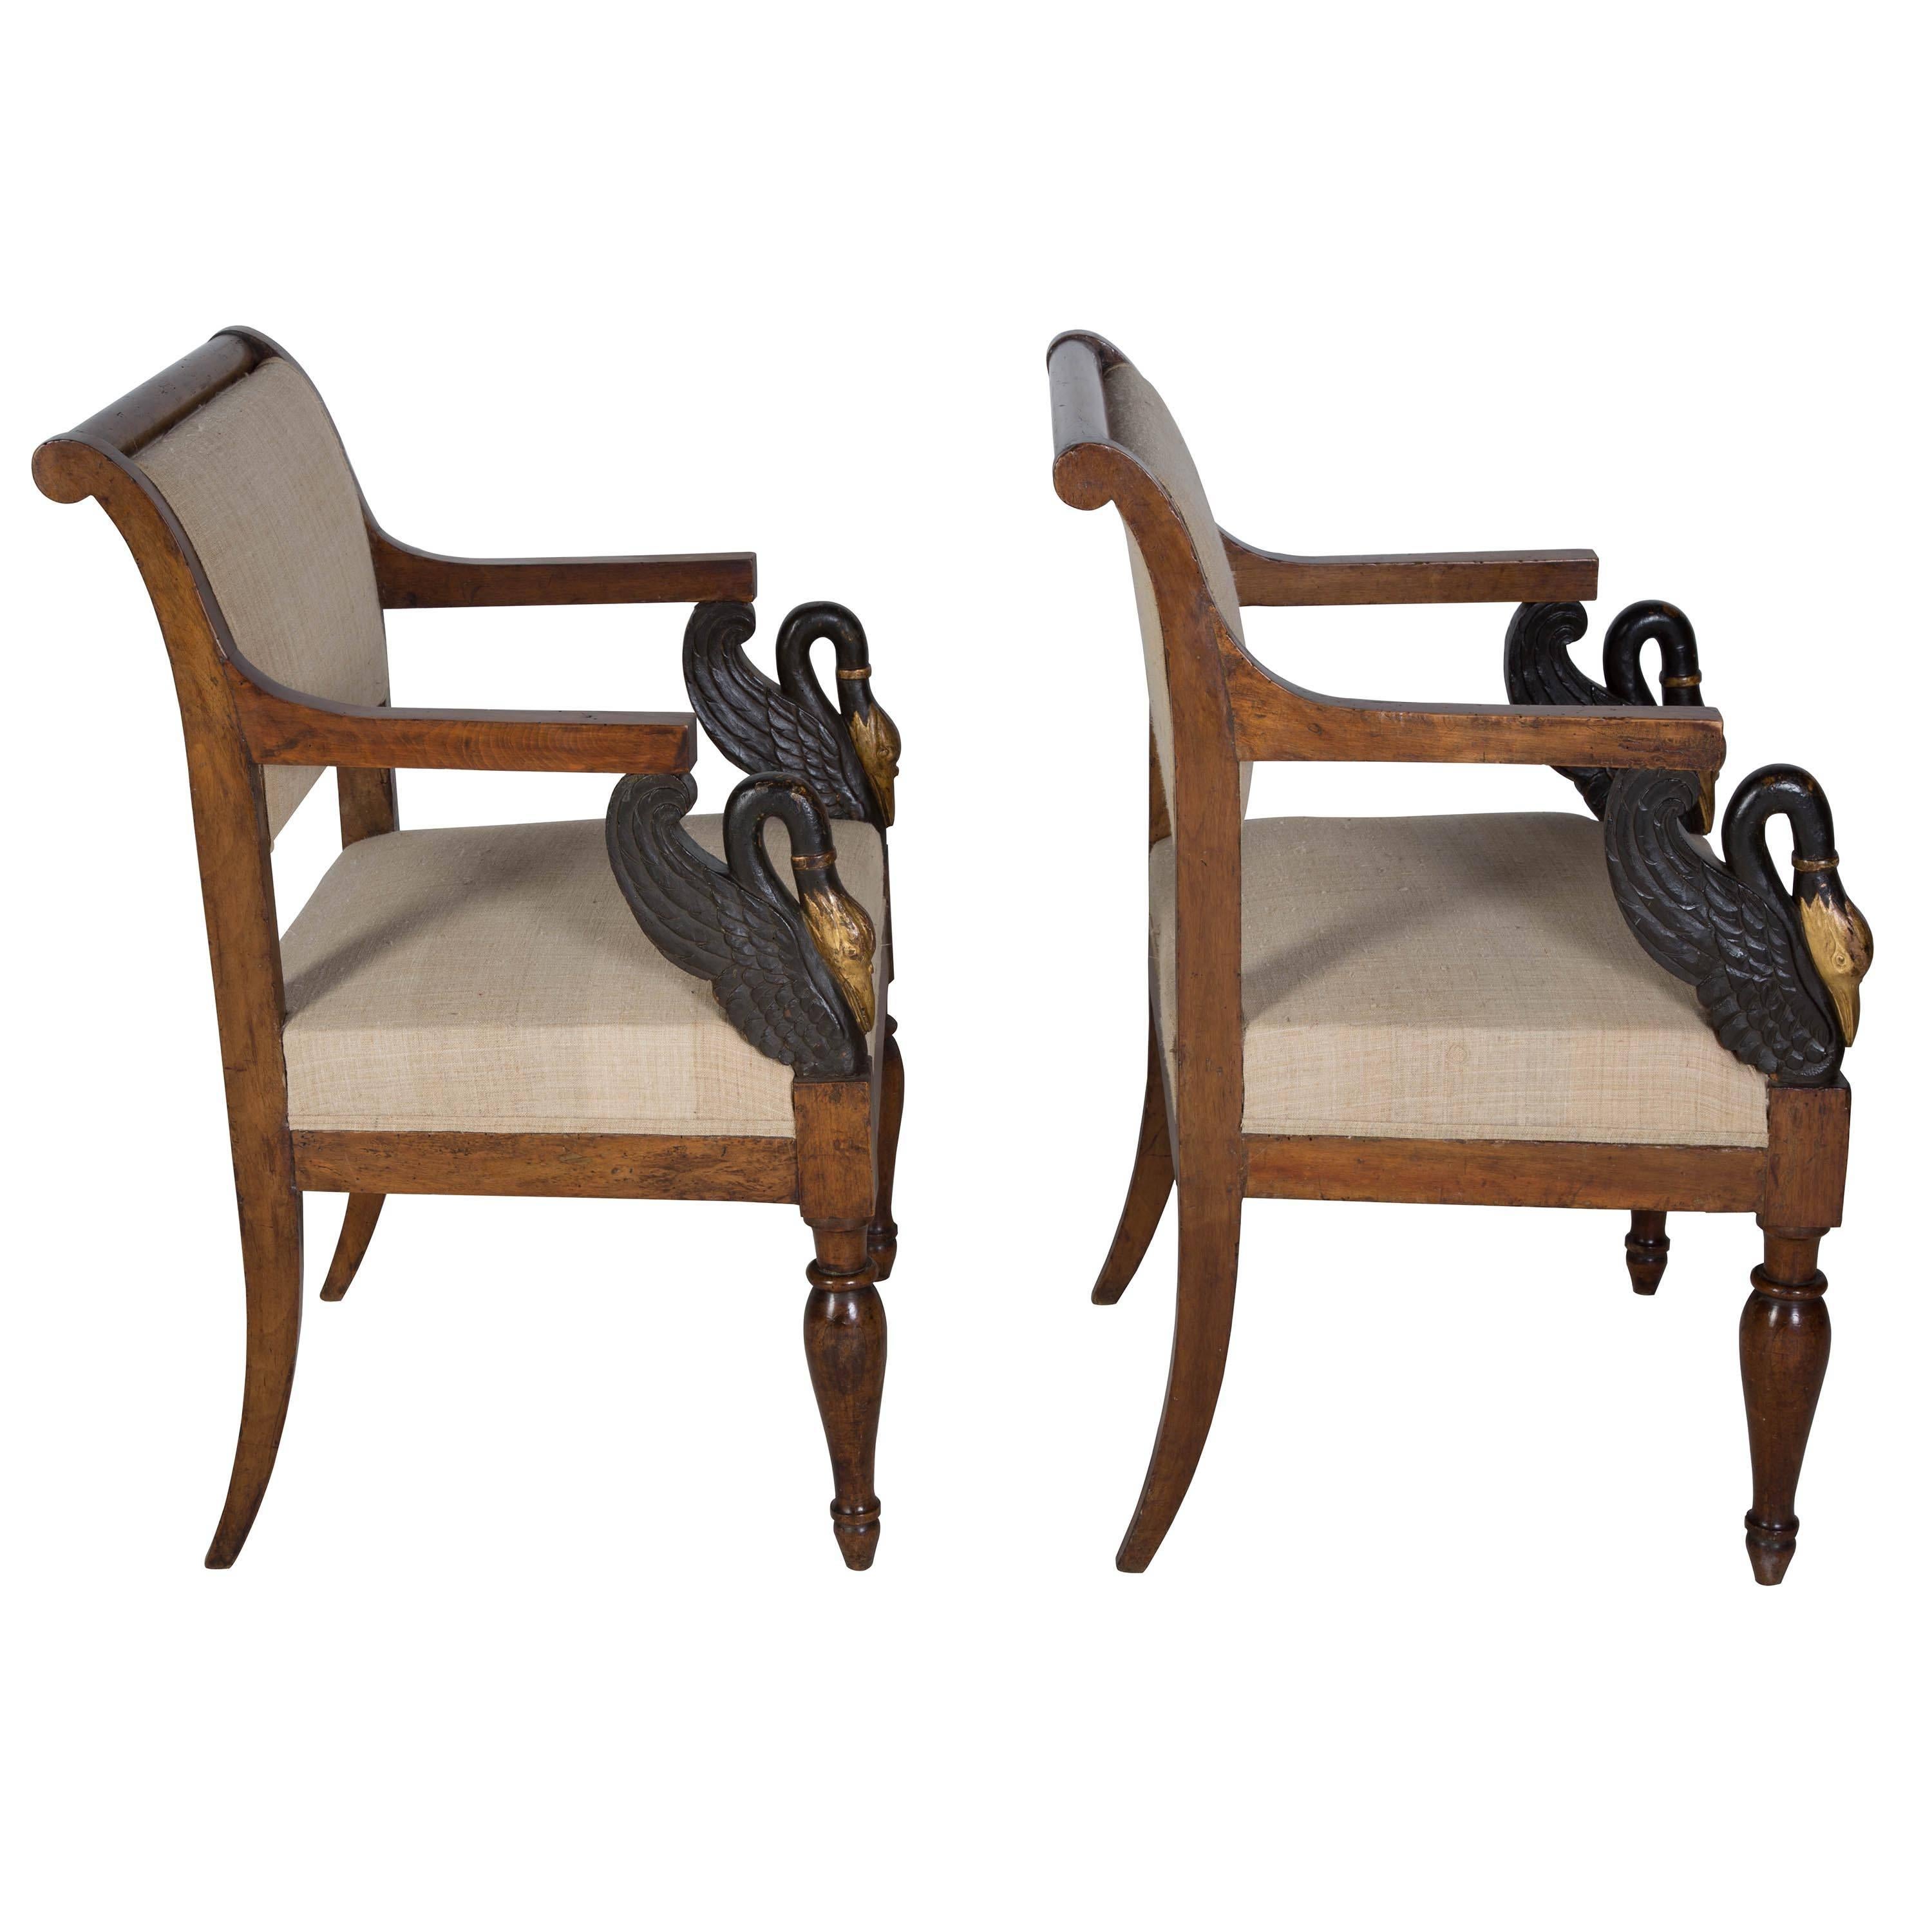 Ebonized Pair of Early 19th Century Italian Chairs